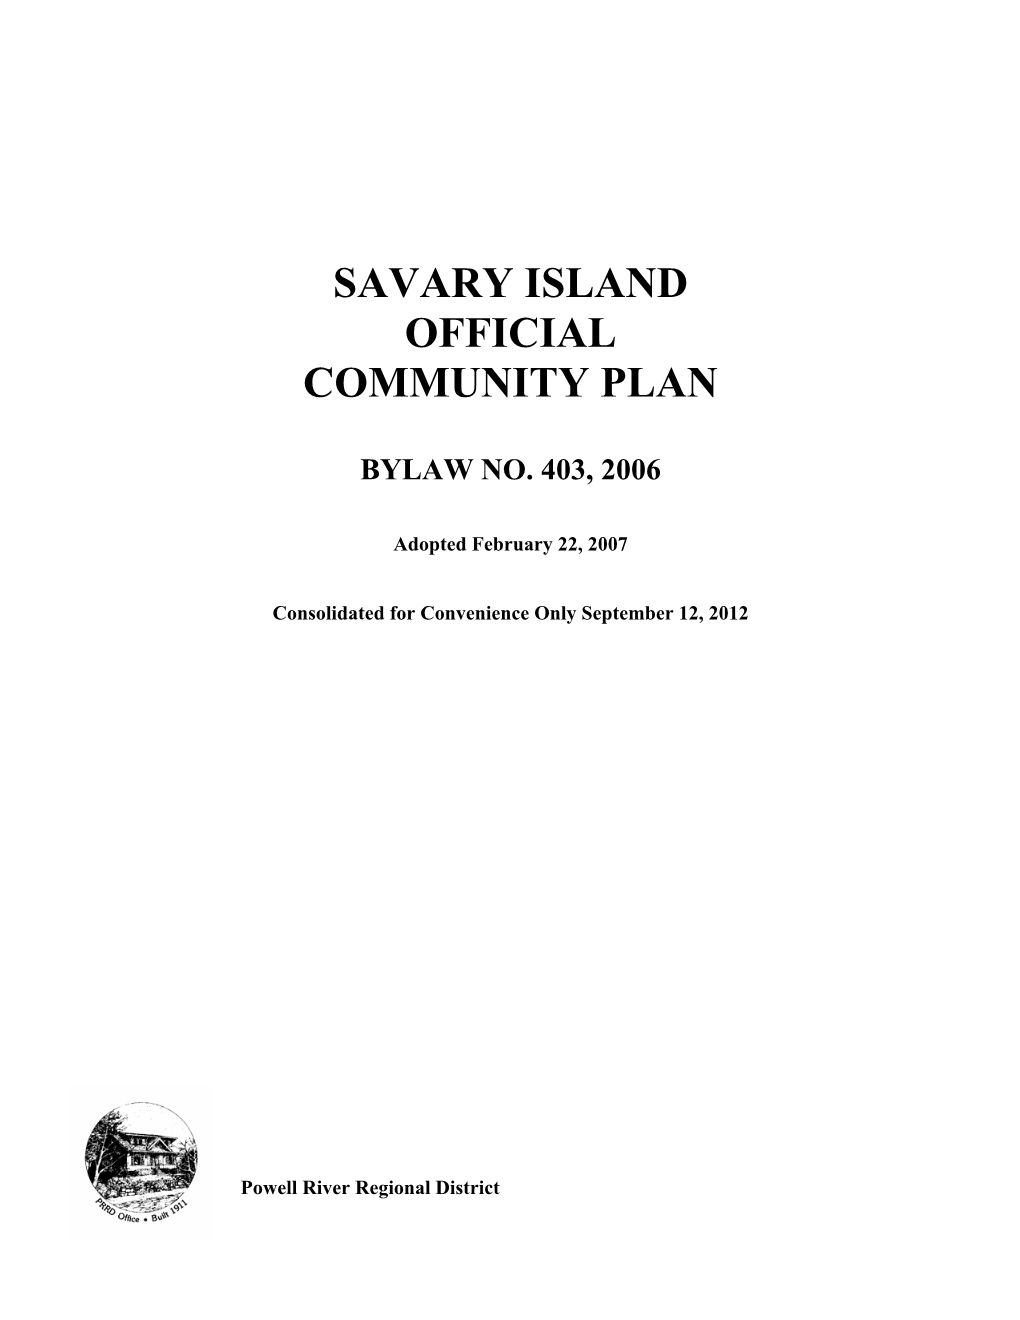 Savary Island Official Community Plan, Bylaw No. 403, 2006”